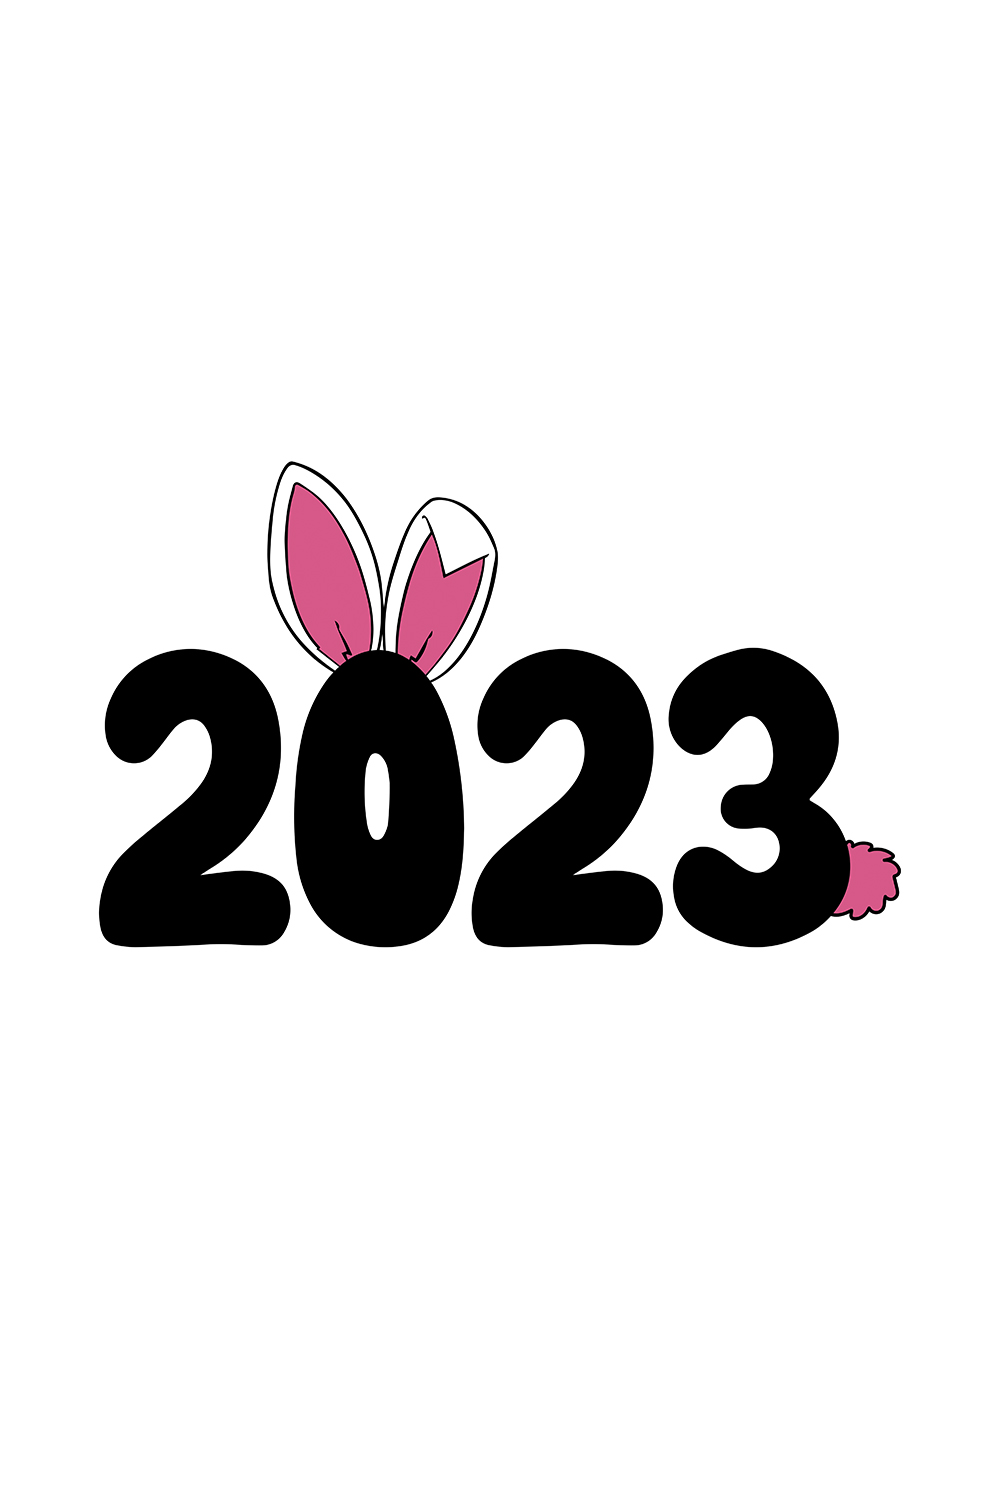 Happy New Year 2023 Bunny Ears Design pinterest image.